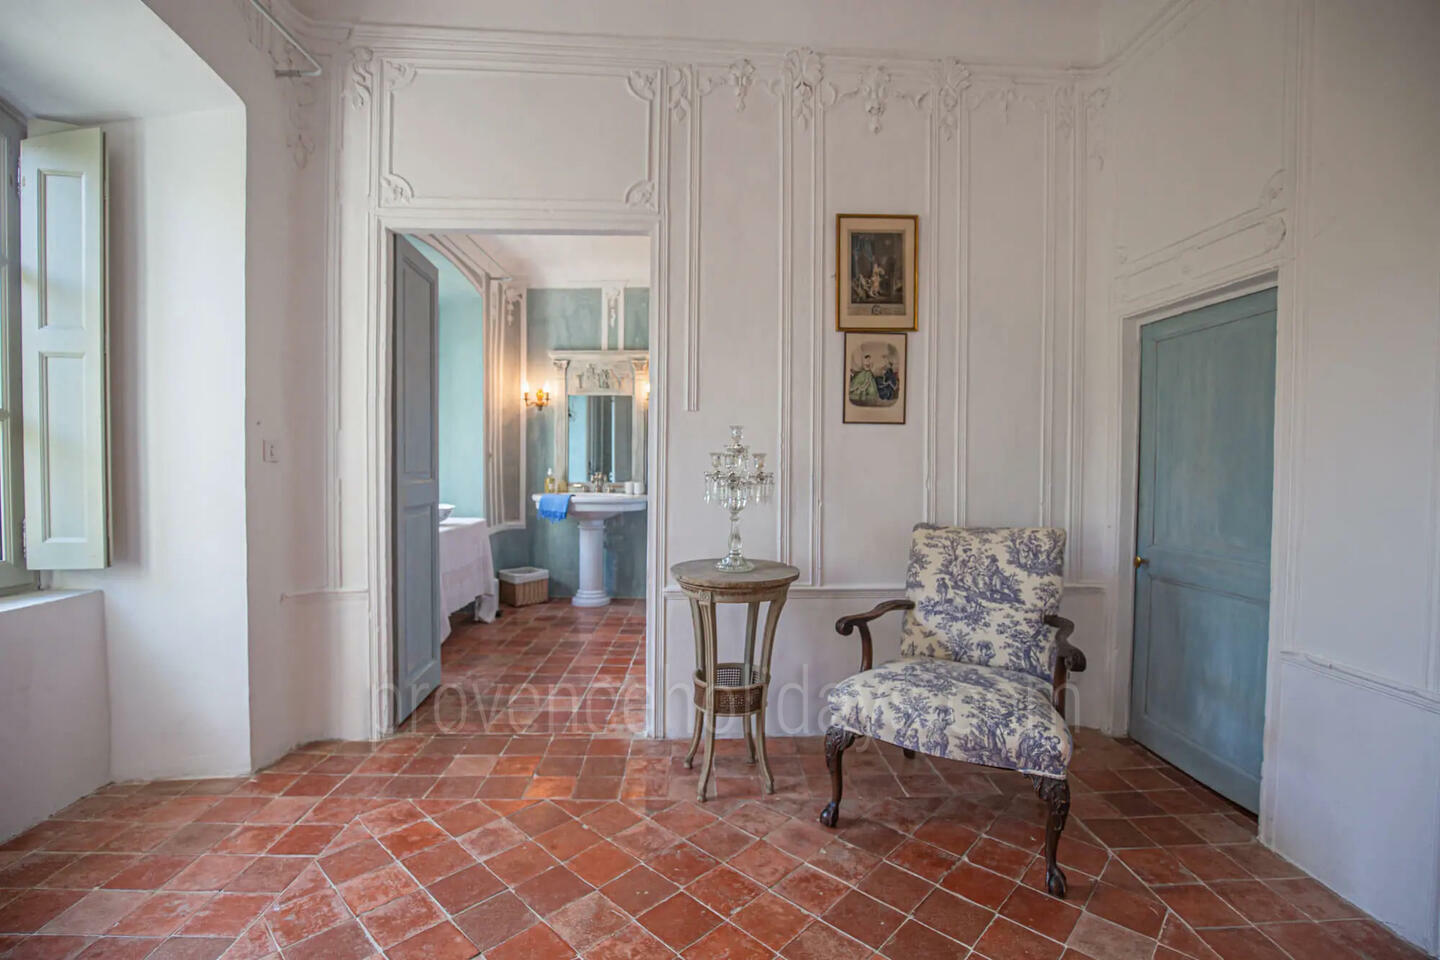 86 - Château de Gignac: Villa: Interior